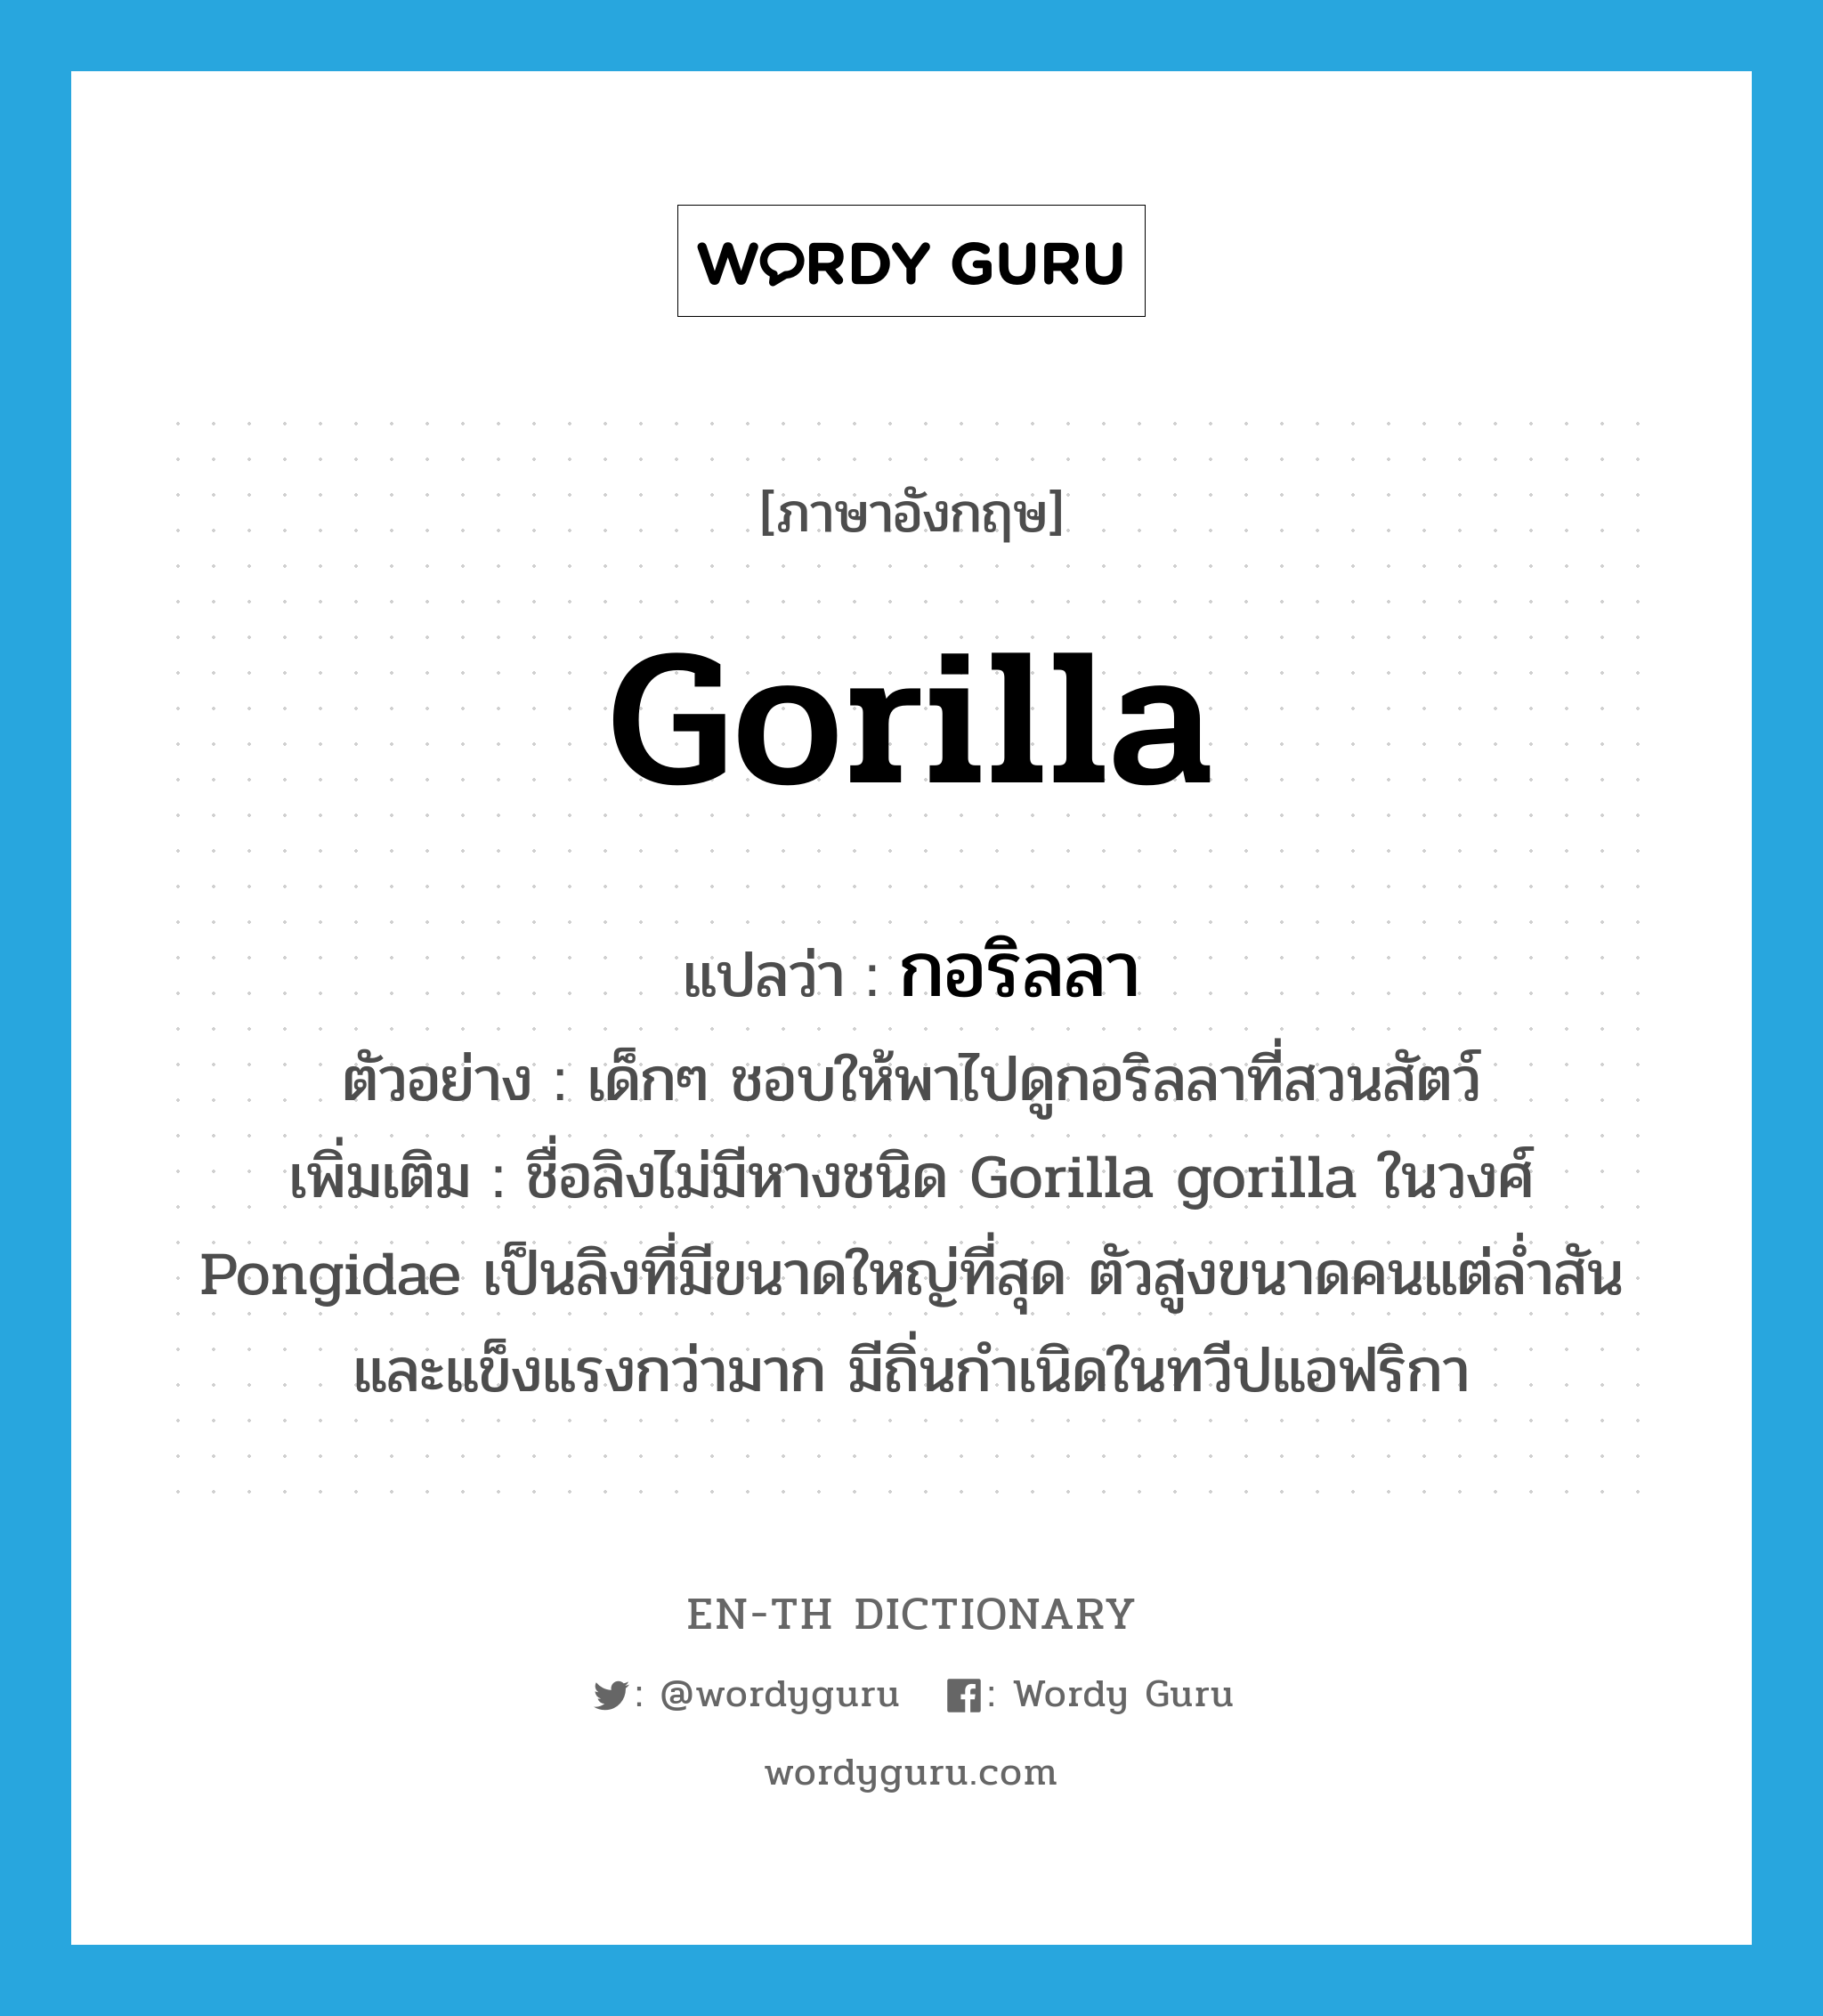 gorilla แปลว่า?, คำศัพท์ภาษาอังกฤษ gorilla แปลว่า กอริลลา ประเภท N ตัวอย่าง เด็กๆ ชอบให้พาไปดูกอริลลาที่สวนสัตว์ เพิ่มเติม ชื่อลิงไม่มีหางชนิด Gorilla gorilla ในวงศ์ Pongidae เป็นลิงที่มีขนาดใหญ่ที่สุด ตัวสูงขนาดคนแต่ล่ำสันและแข็งแรงกว่ามาก มีถิ่นกำเนิดในทวีปแอฟริกา หมวด N